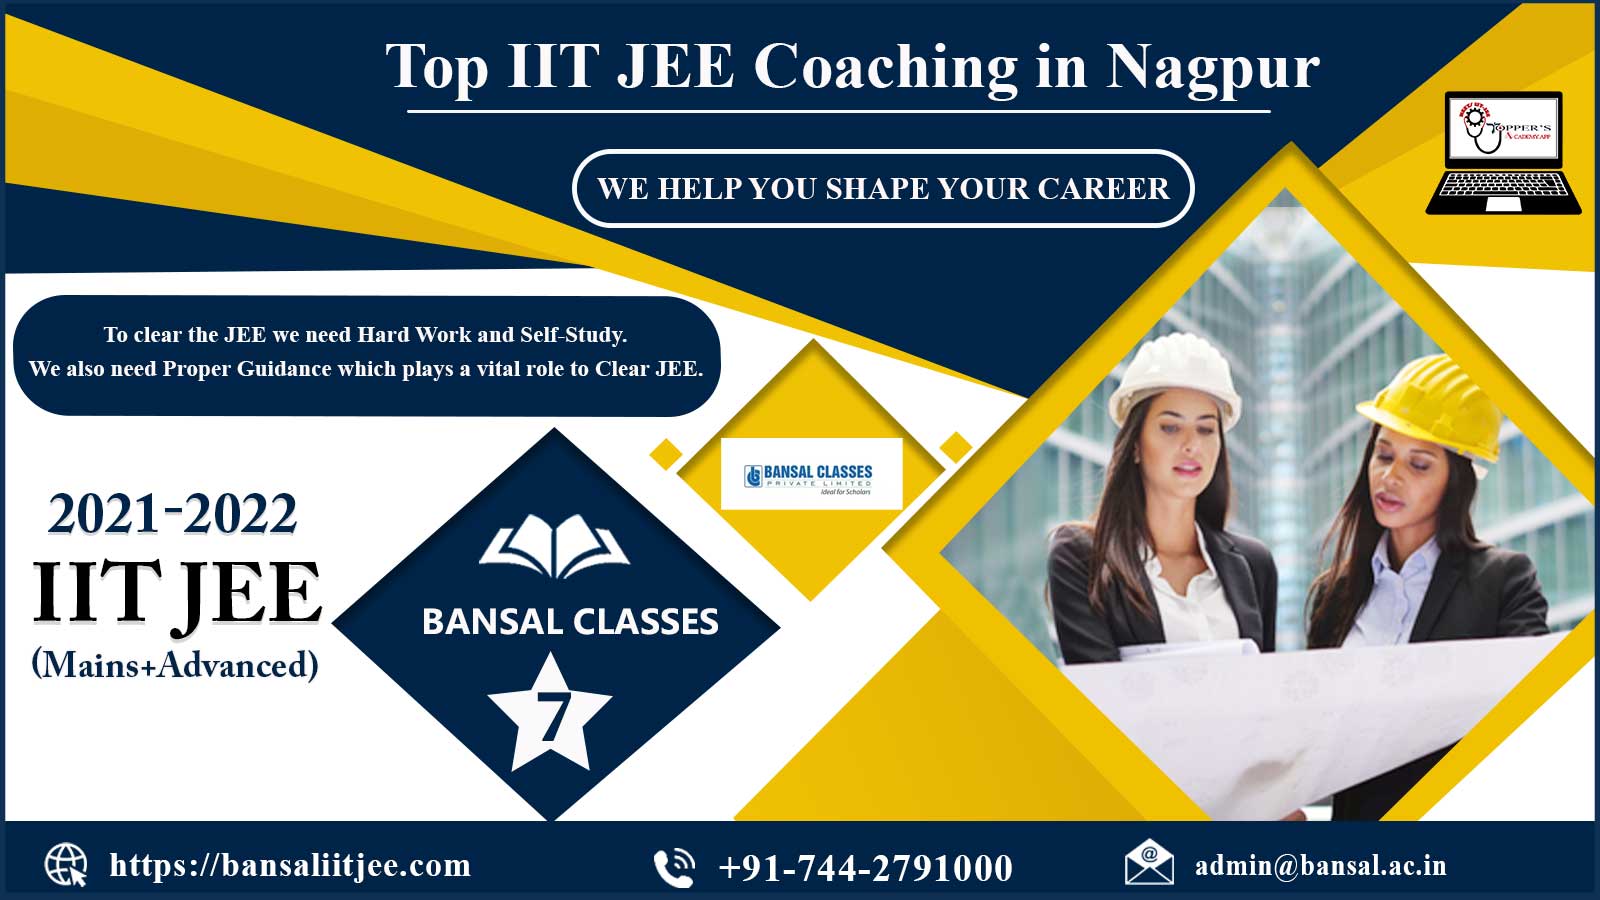 Top IIT JEE Coaching Centers In Nagpur